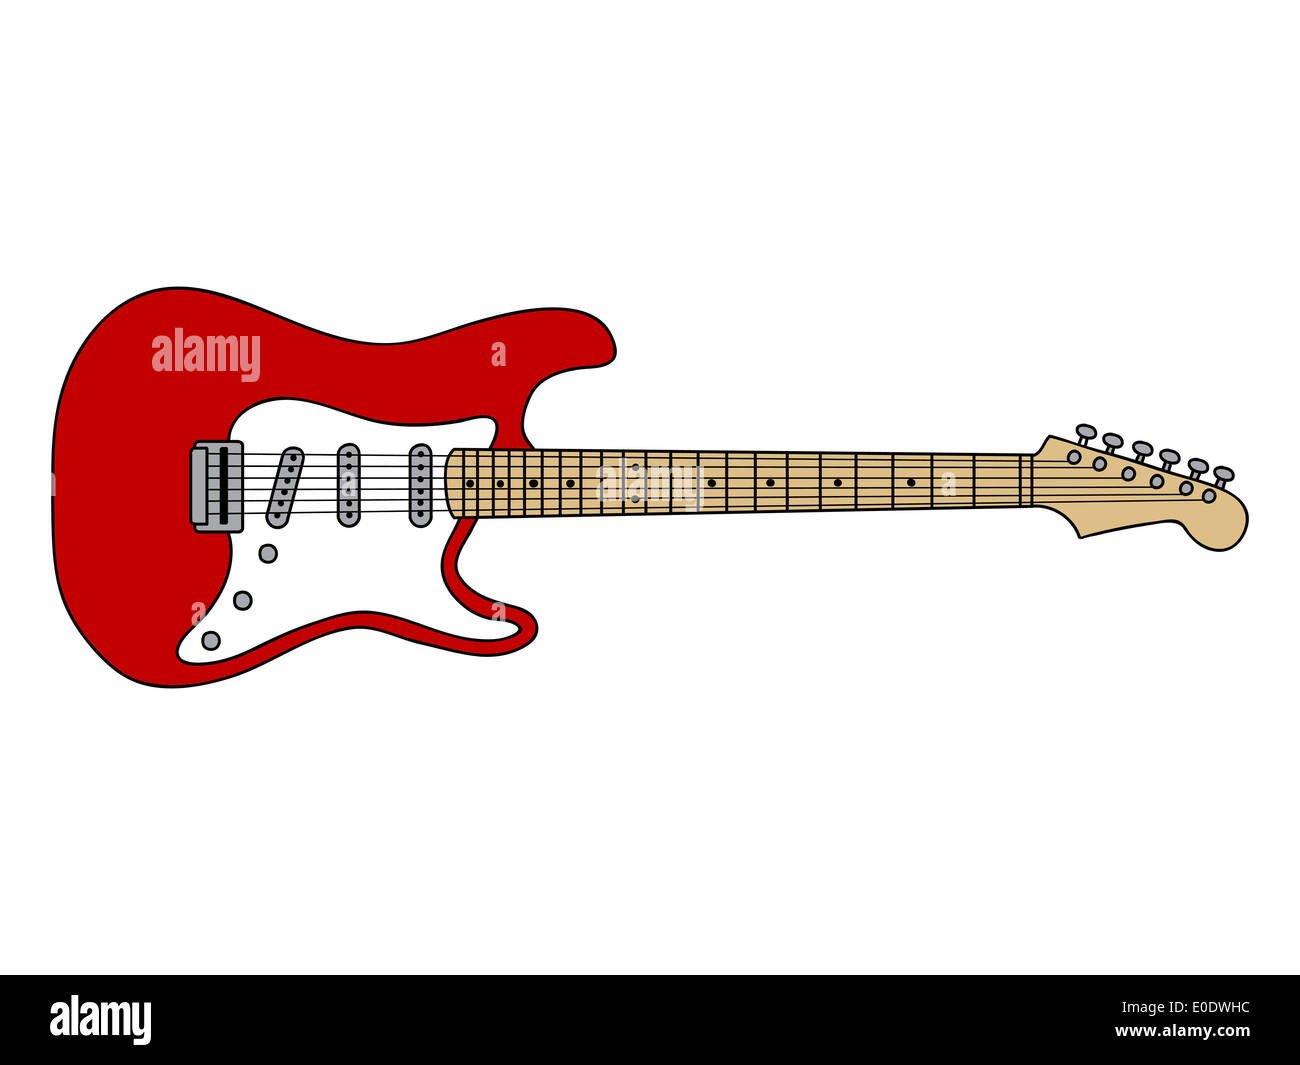 Red guitar illustration Stock Photo